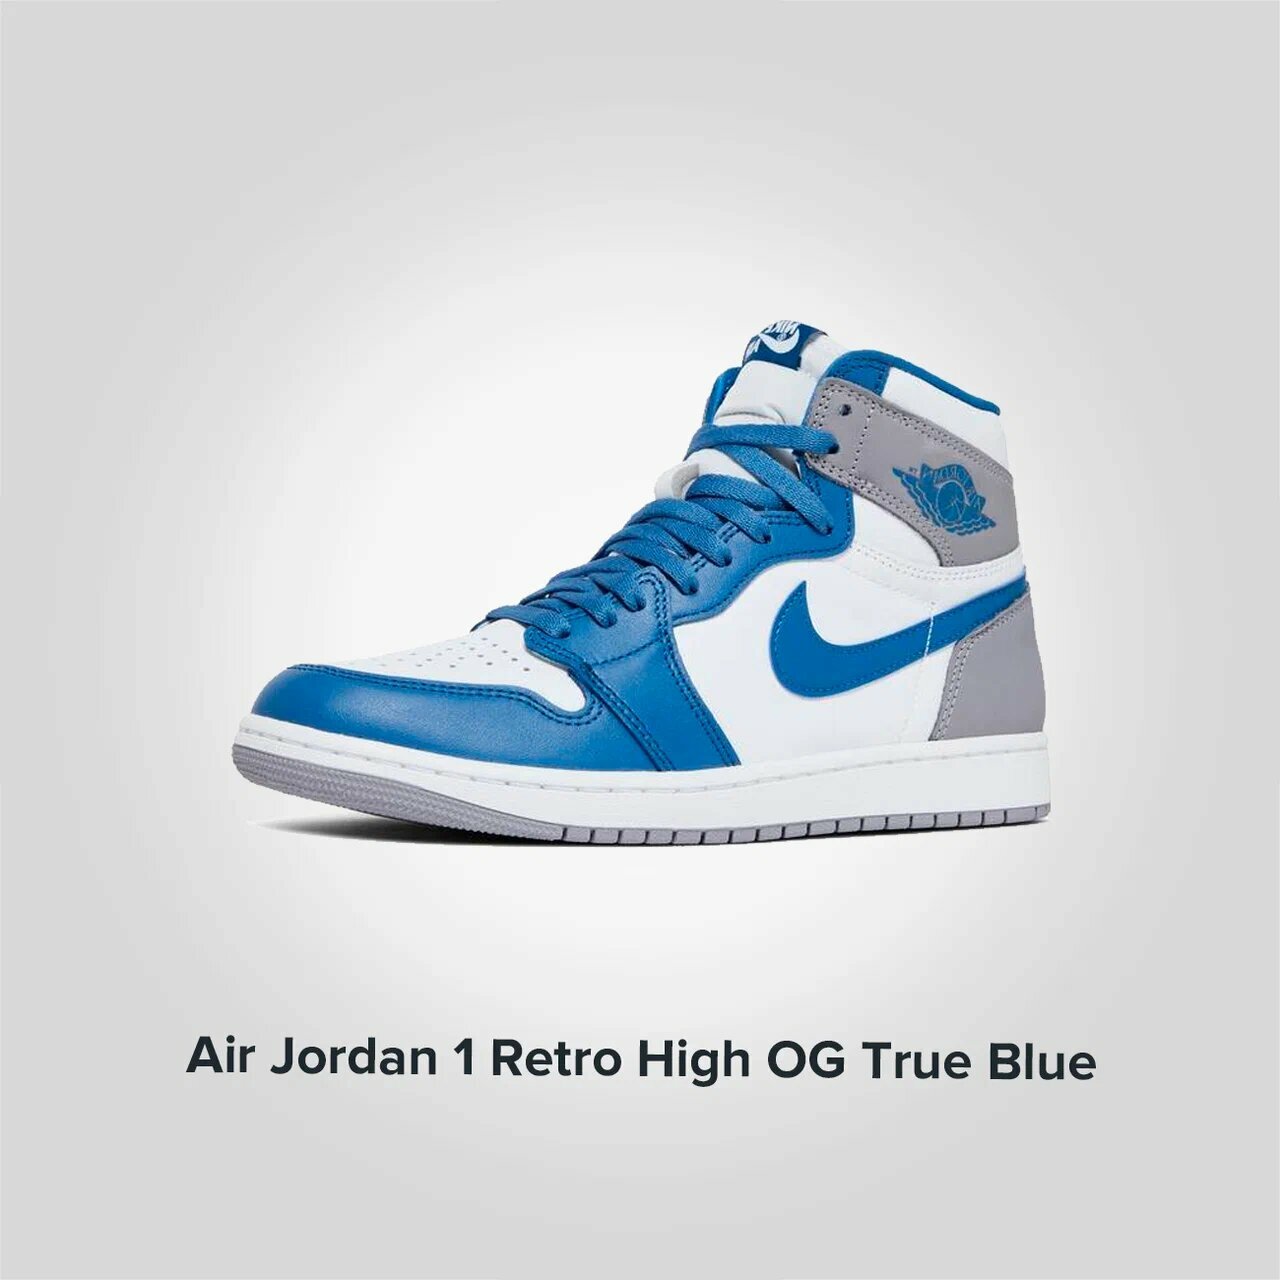 Jordan 1 Retro High OG True Blue